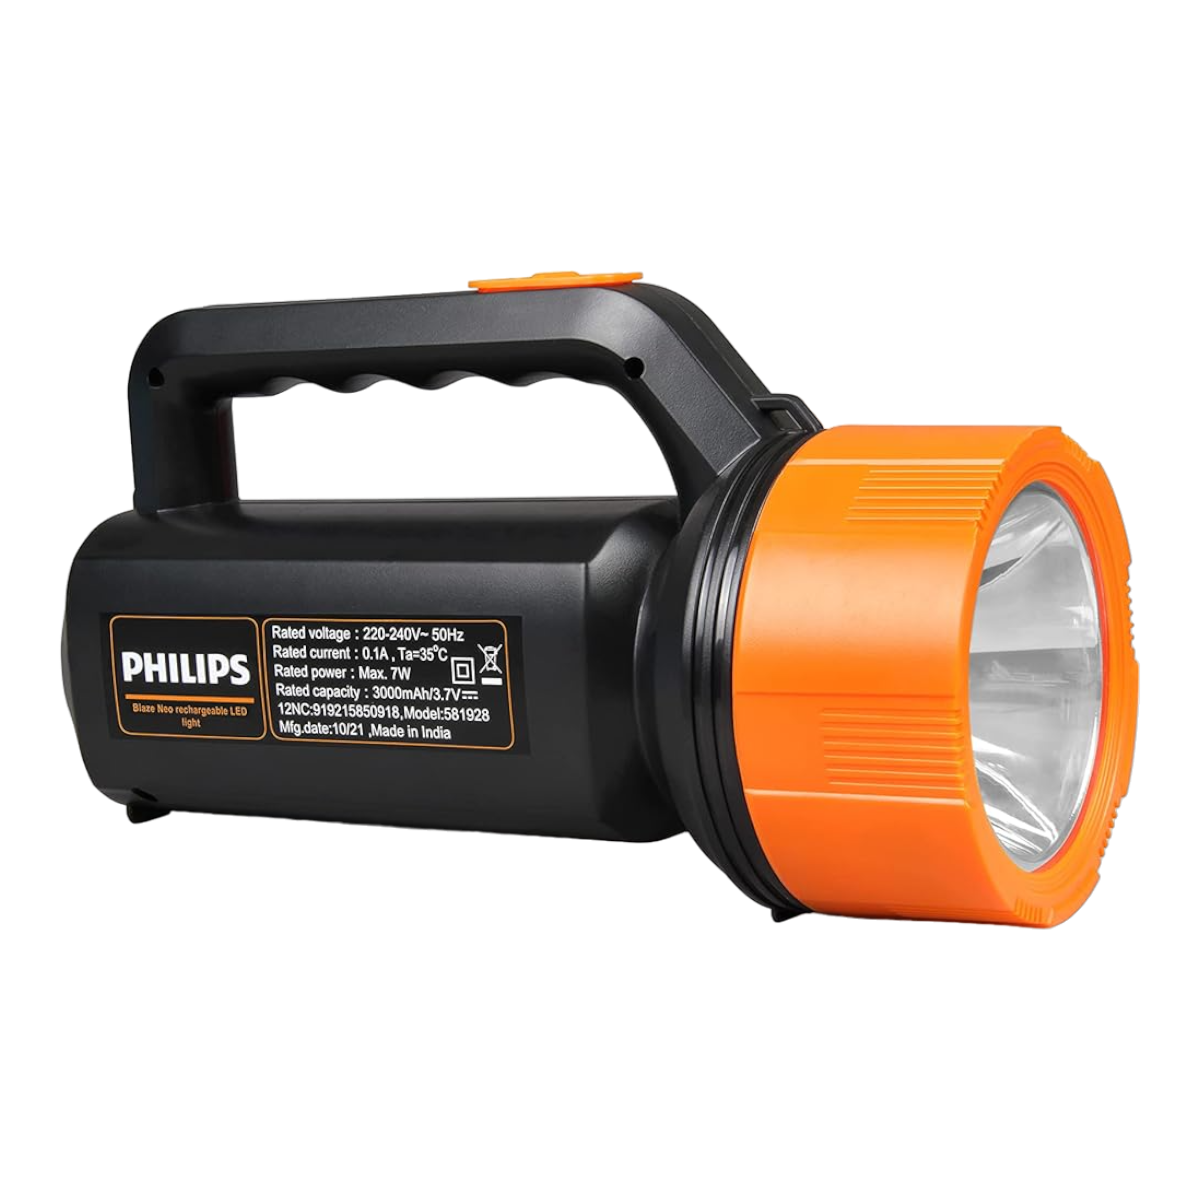 Philips Blaze Neo Rechargeable Emergency light